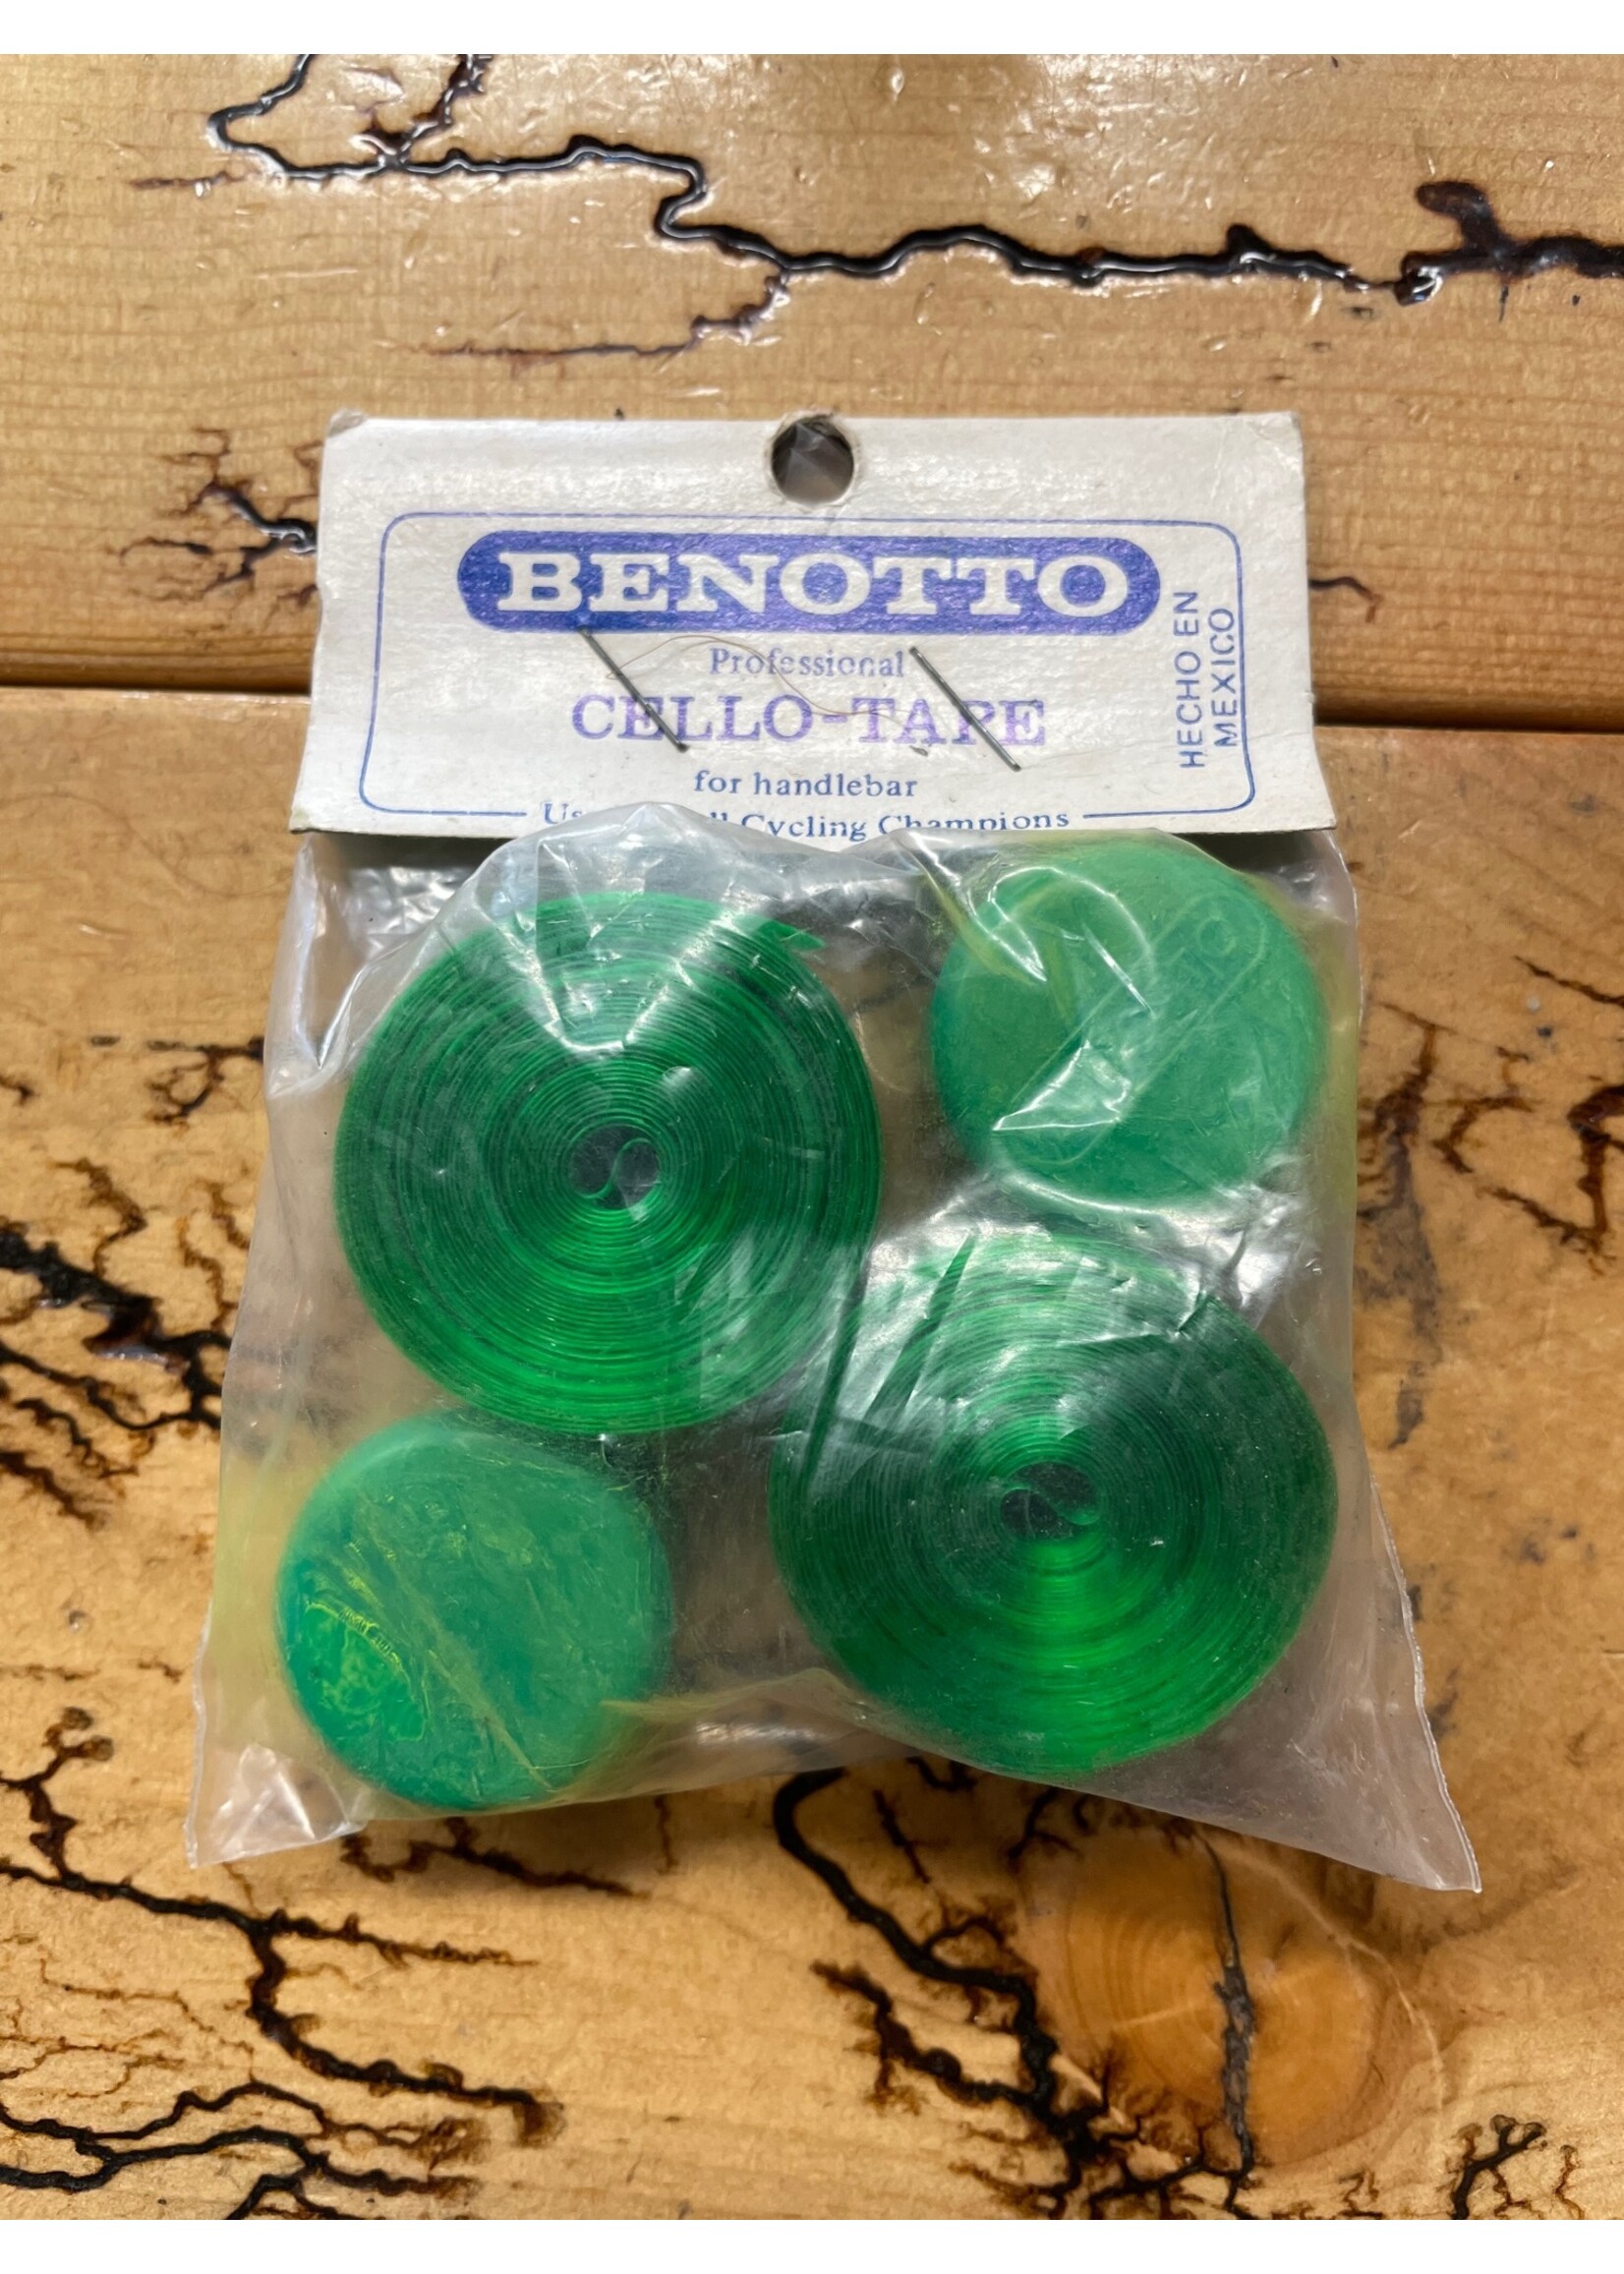 Benotto Benotto Green Cello Tape